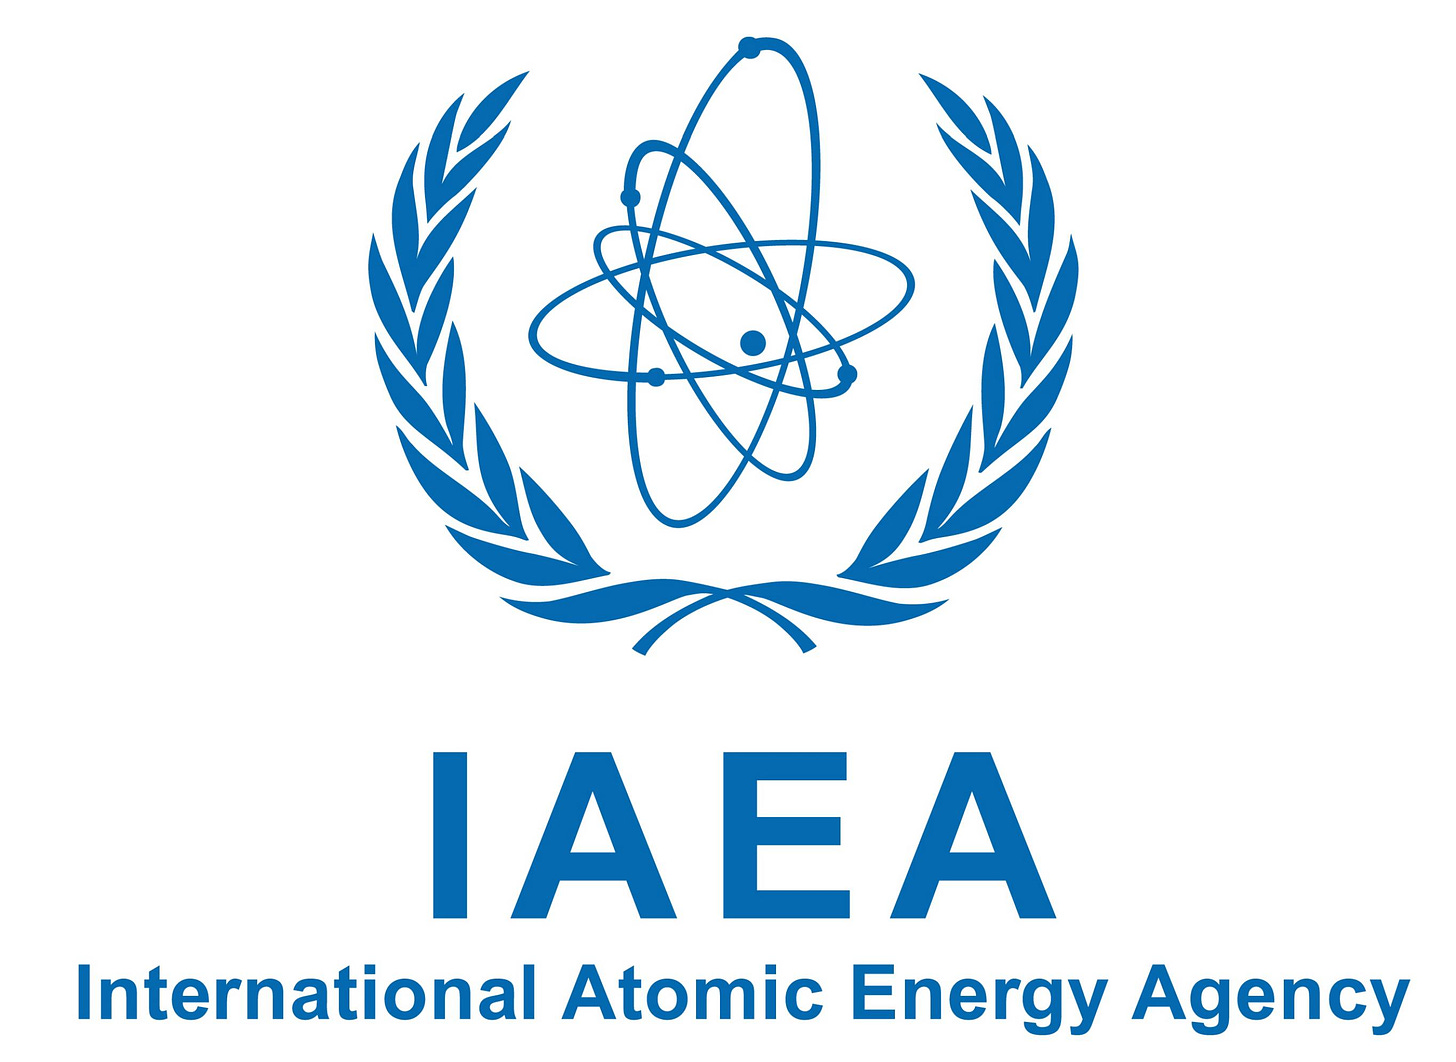 Kazakh Energy Minister Praises IAEA, Notes Kazakhstan's Global Noproliferation Work at IAEA 59th ...